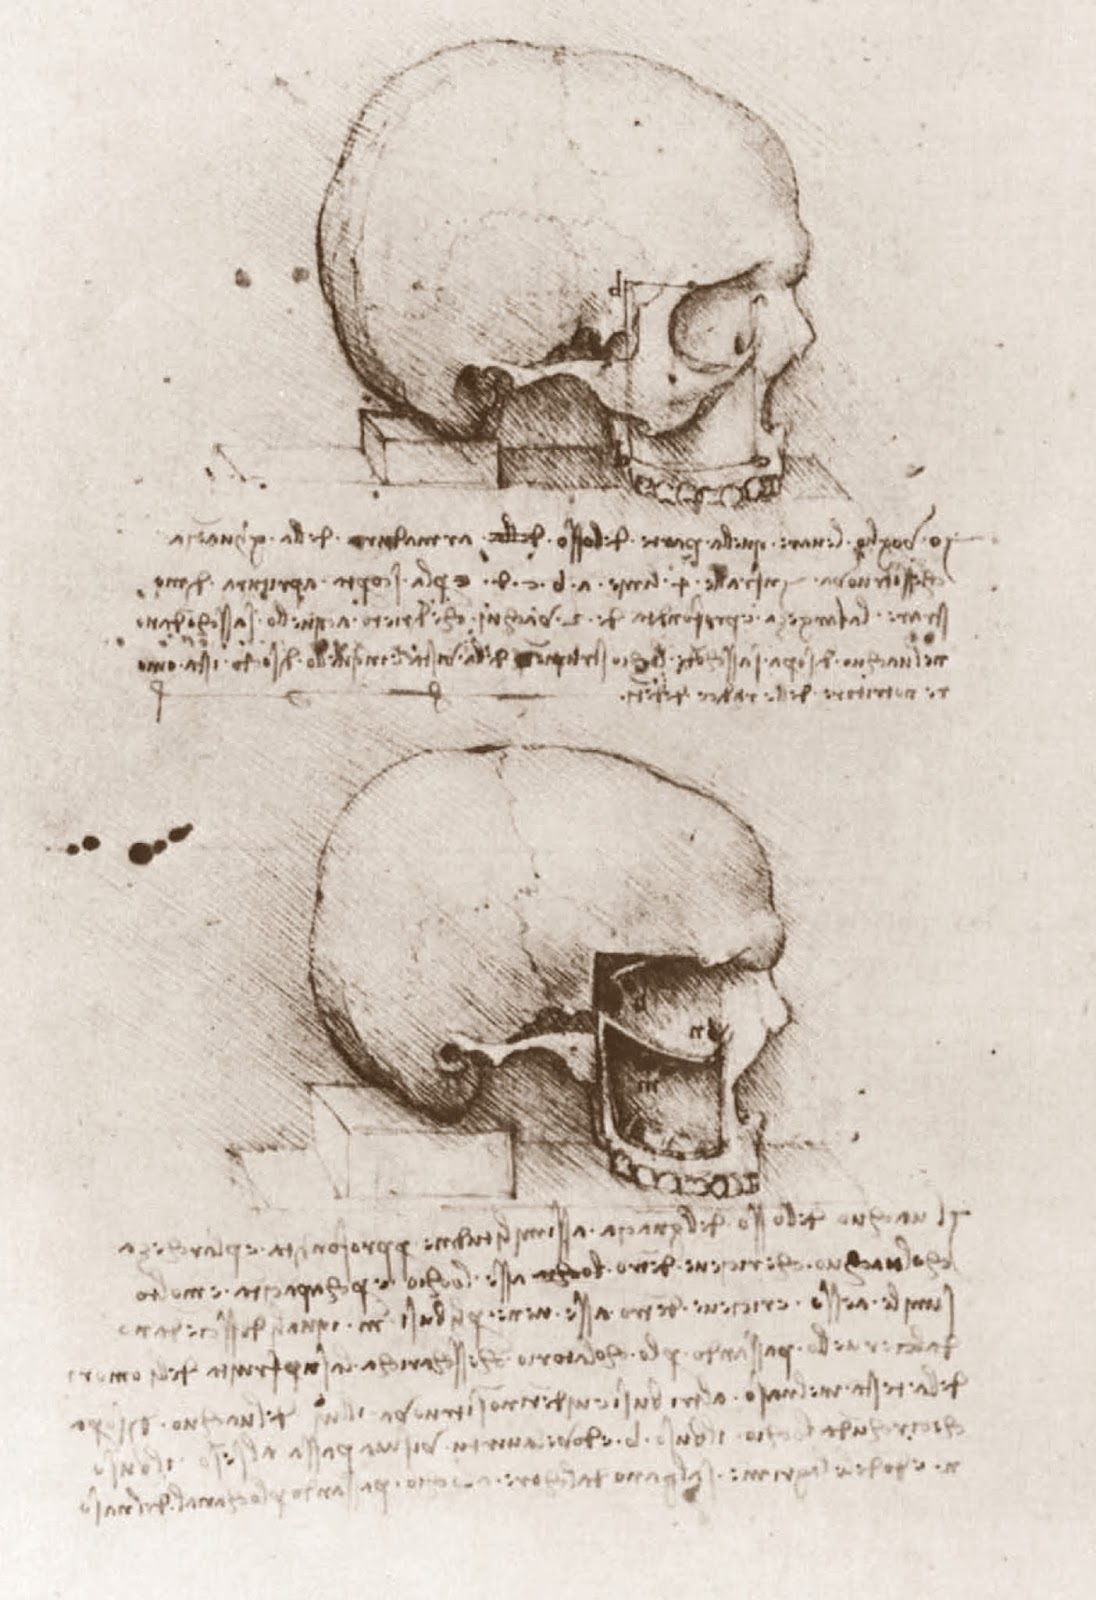 Leonardo+da+Vinci-1452-1519 (760).jpg